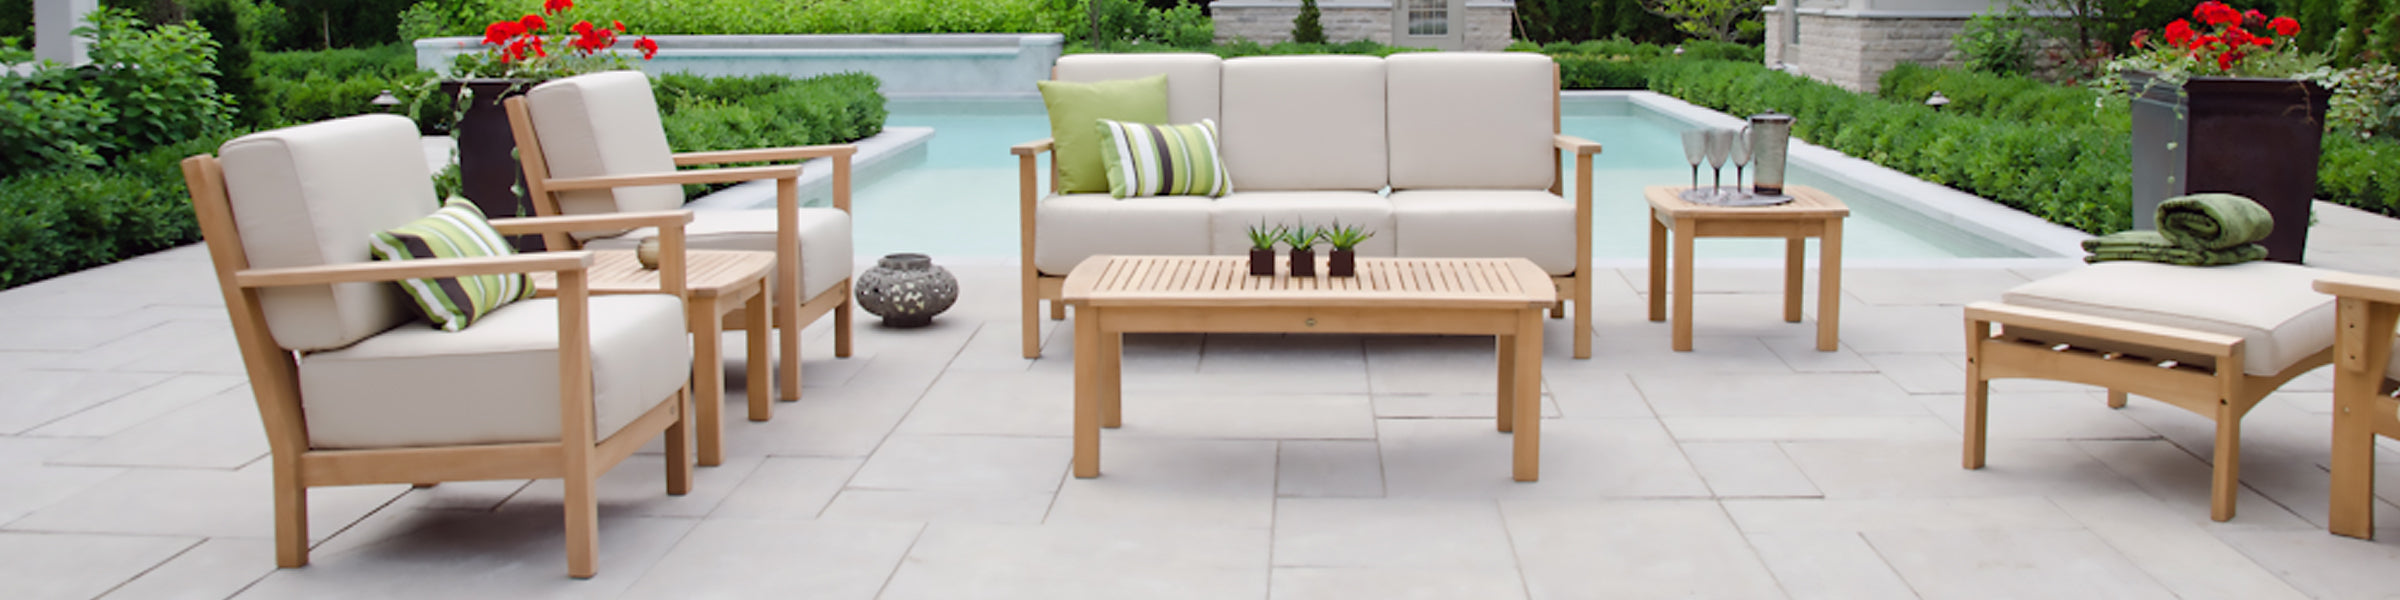 Teak wood patio seating